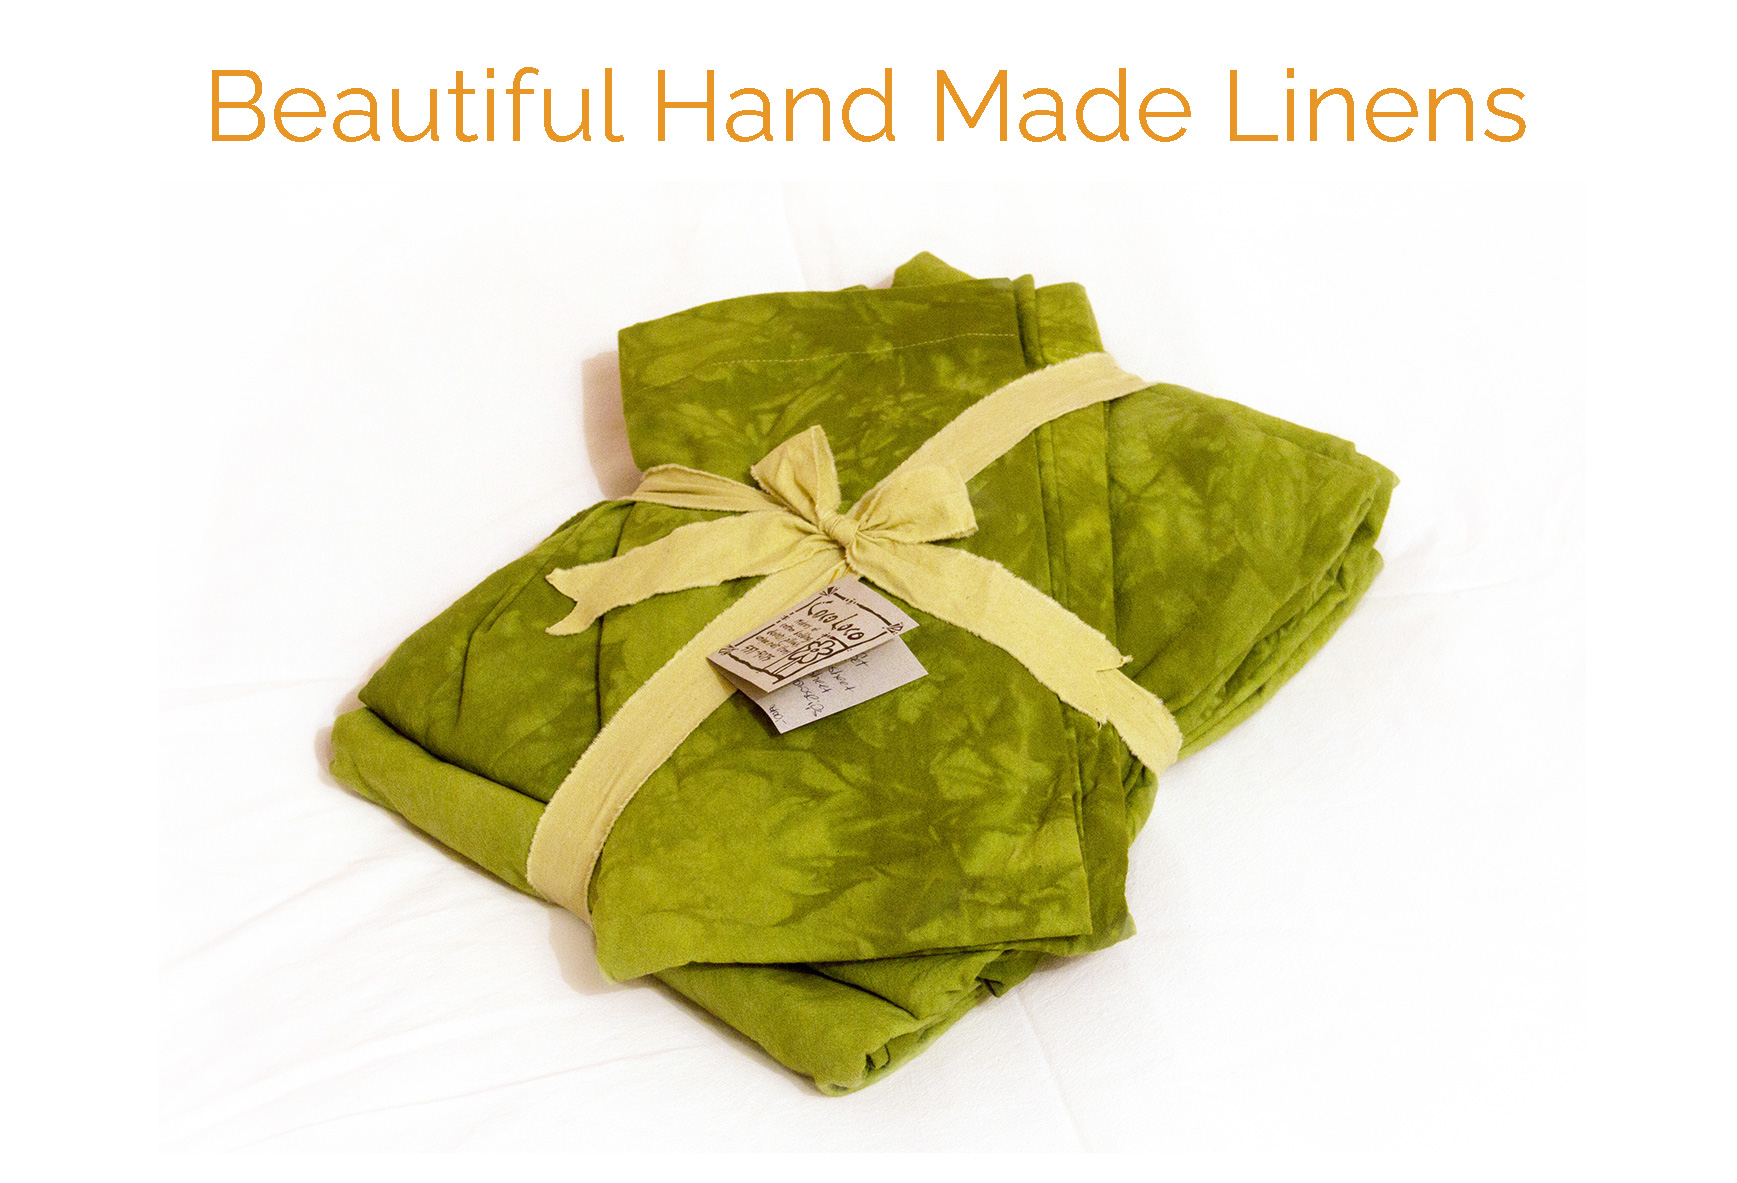 Handmade Linens